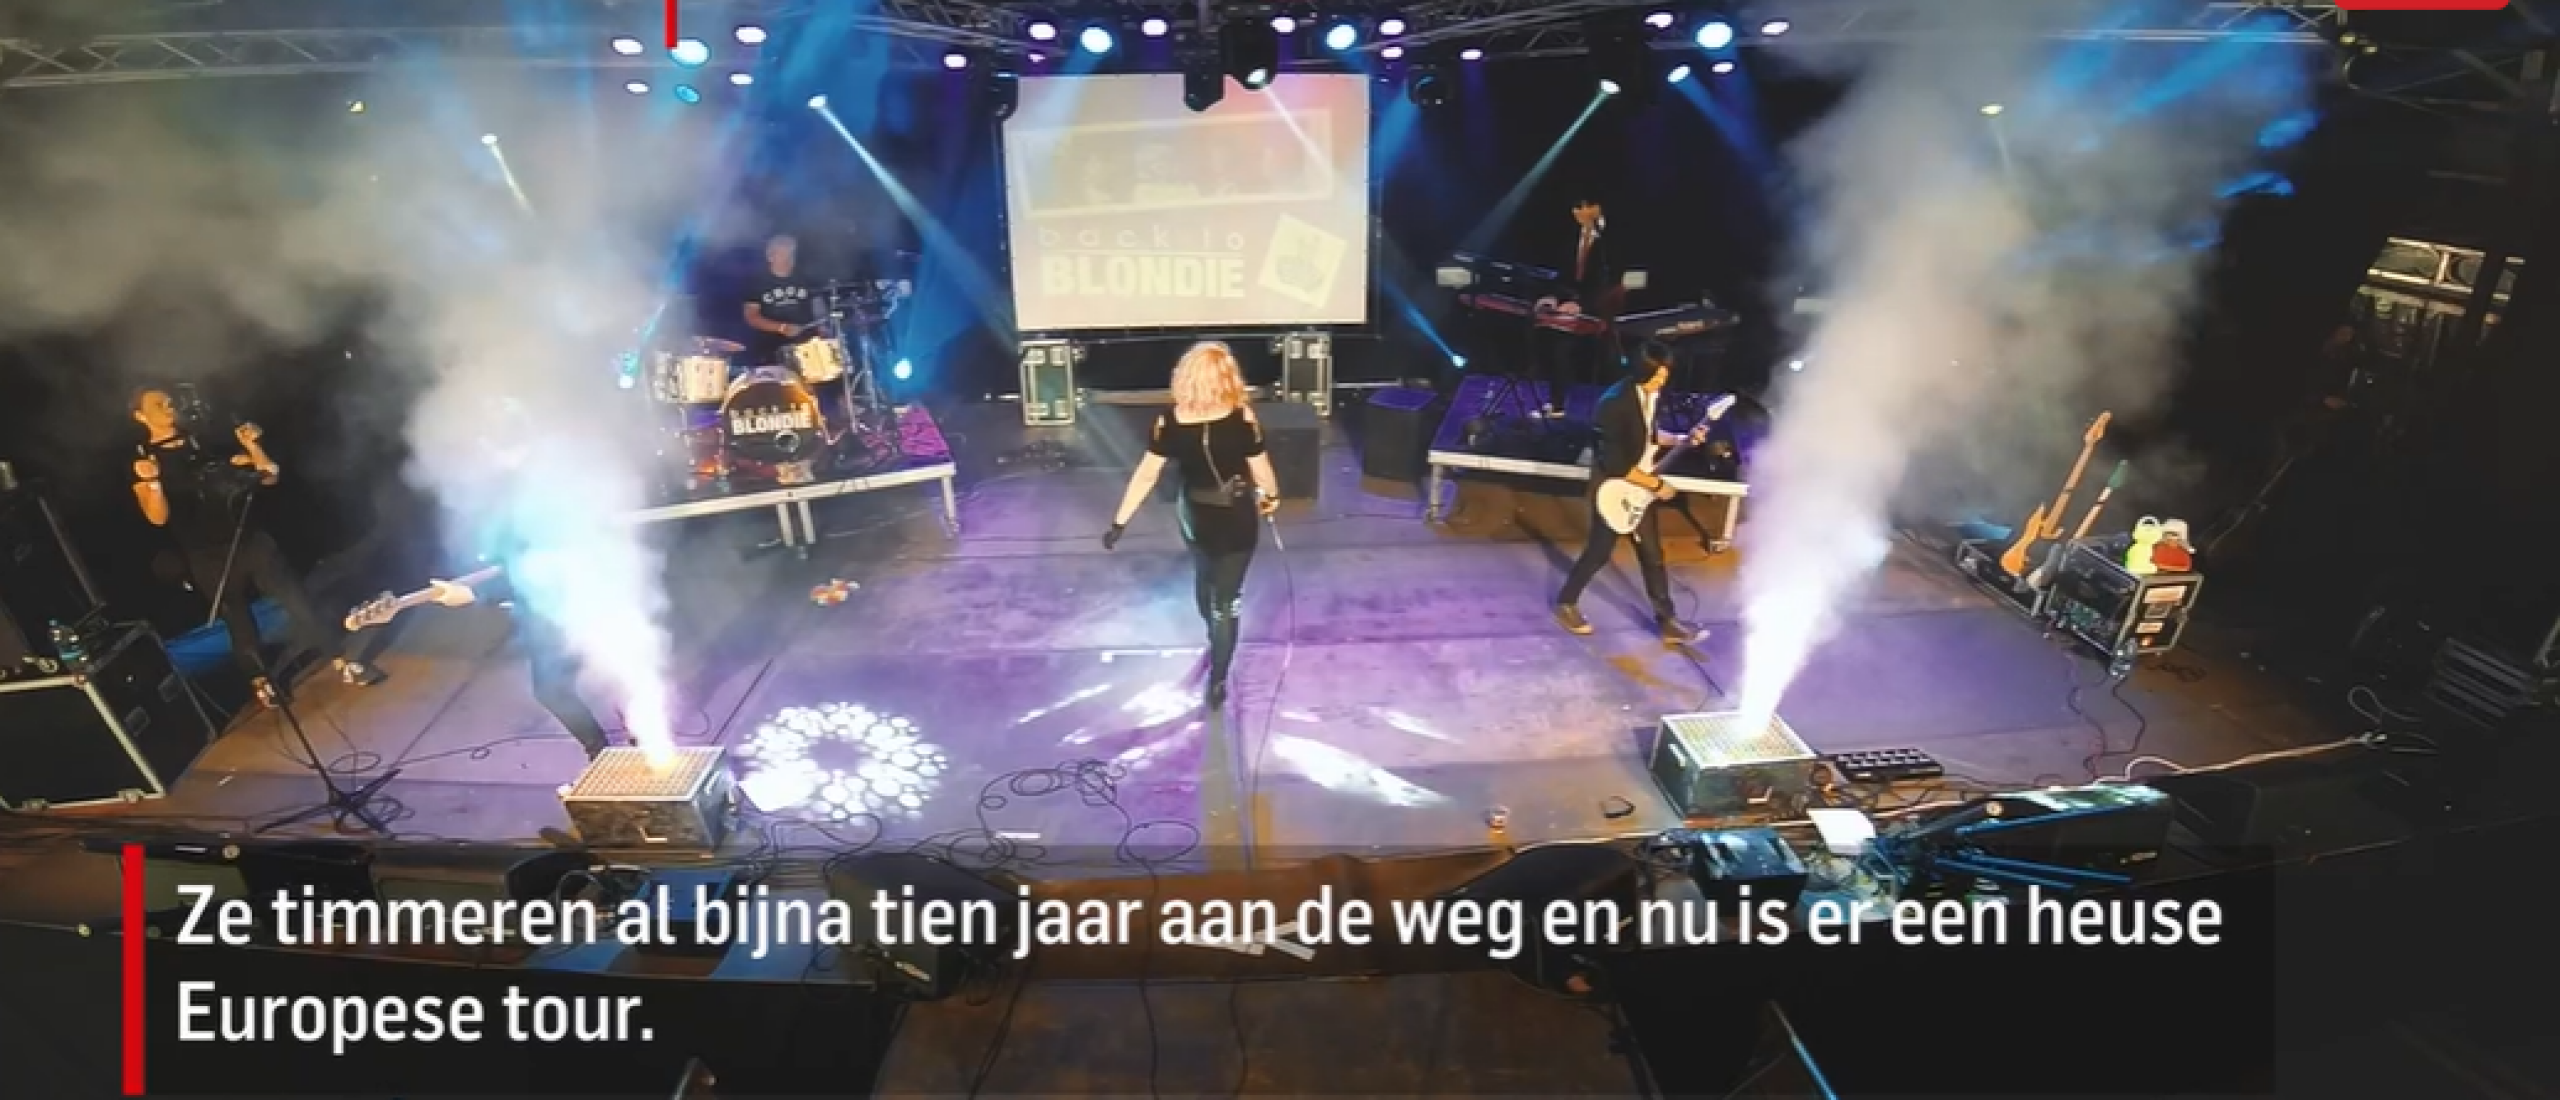 Nijmeegse tributeband Back to Blondie verovert Europa